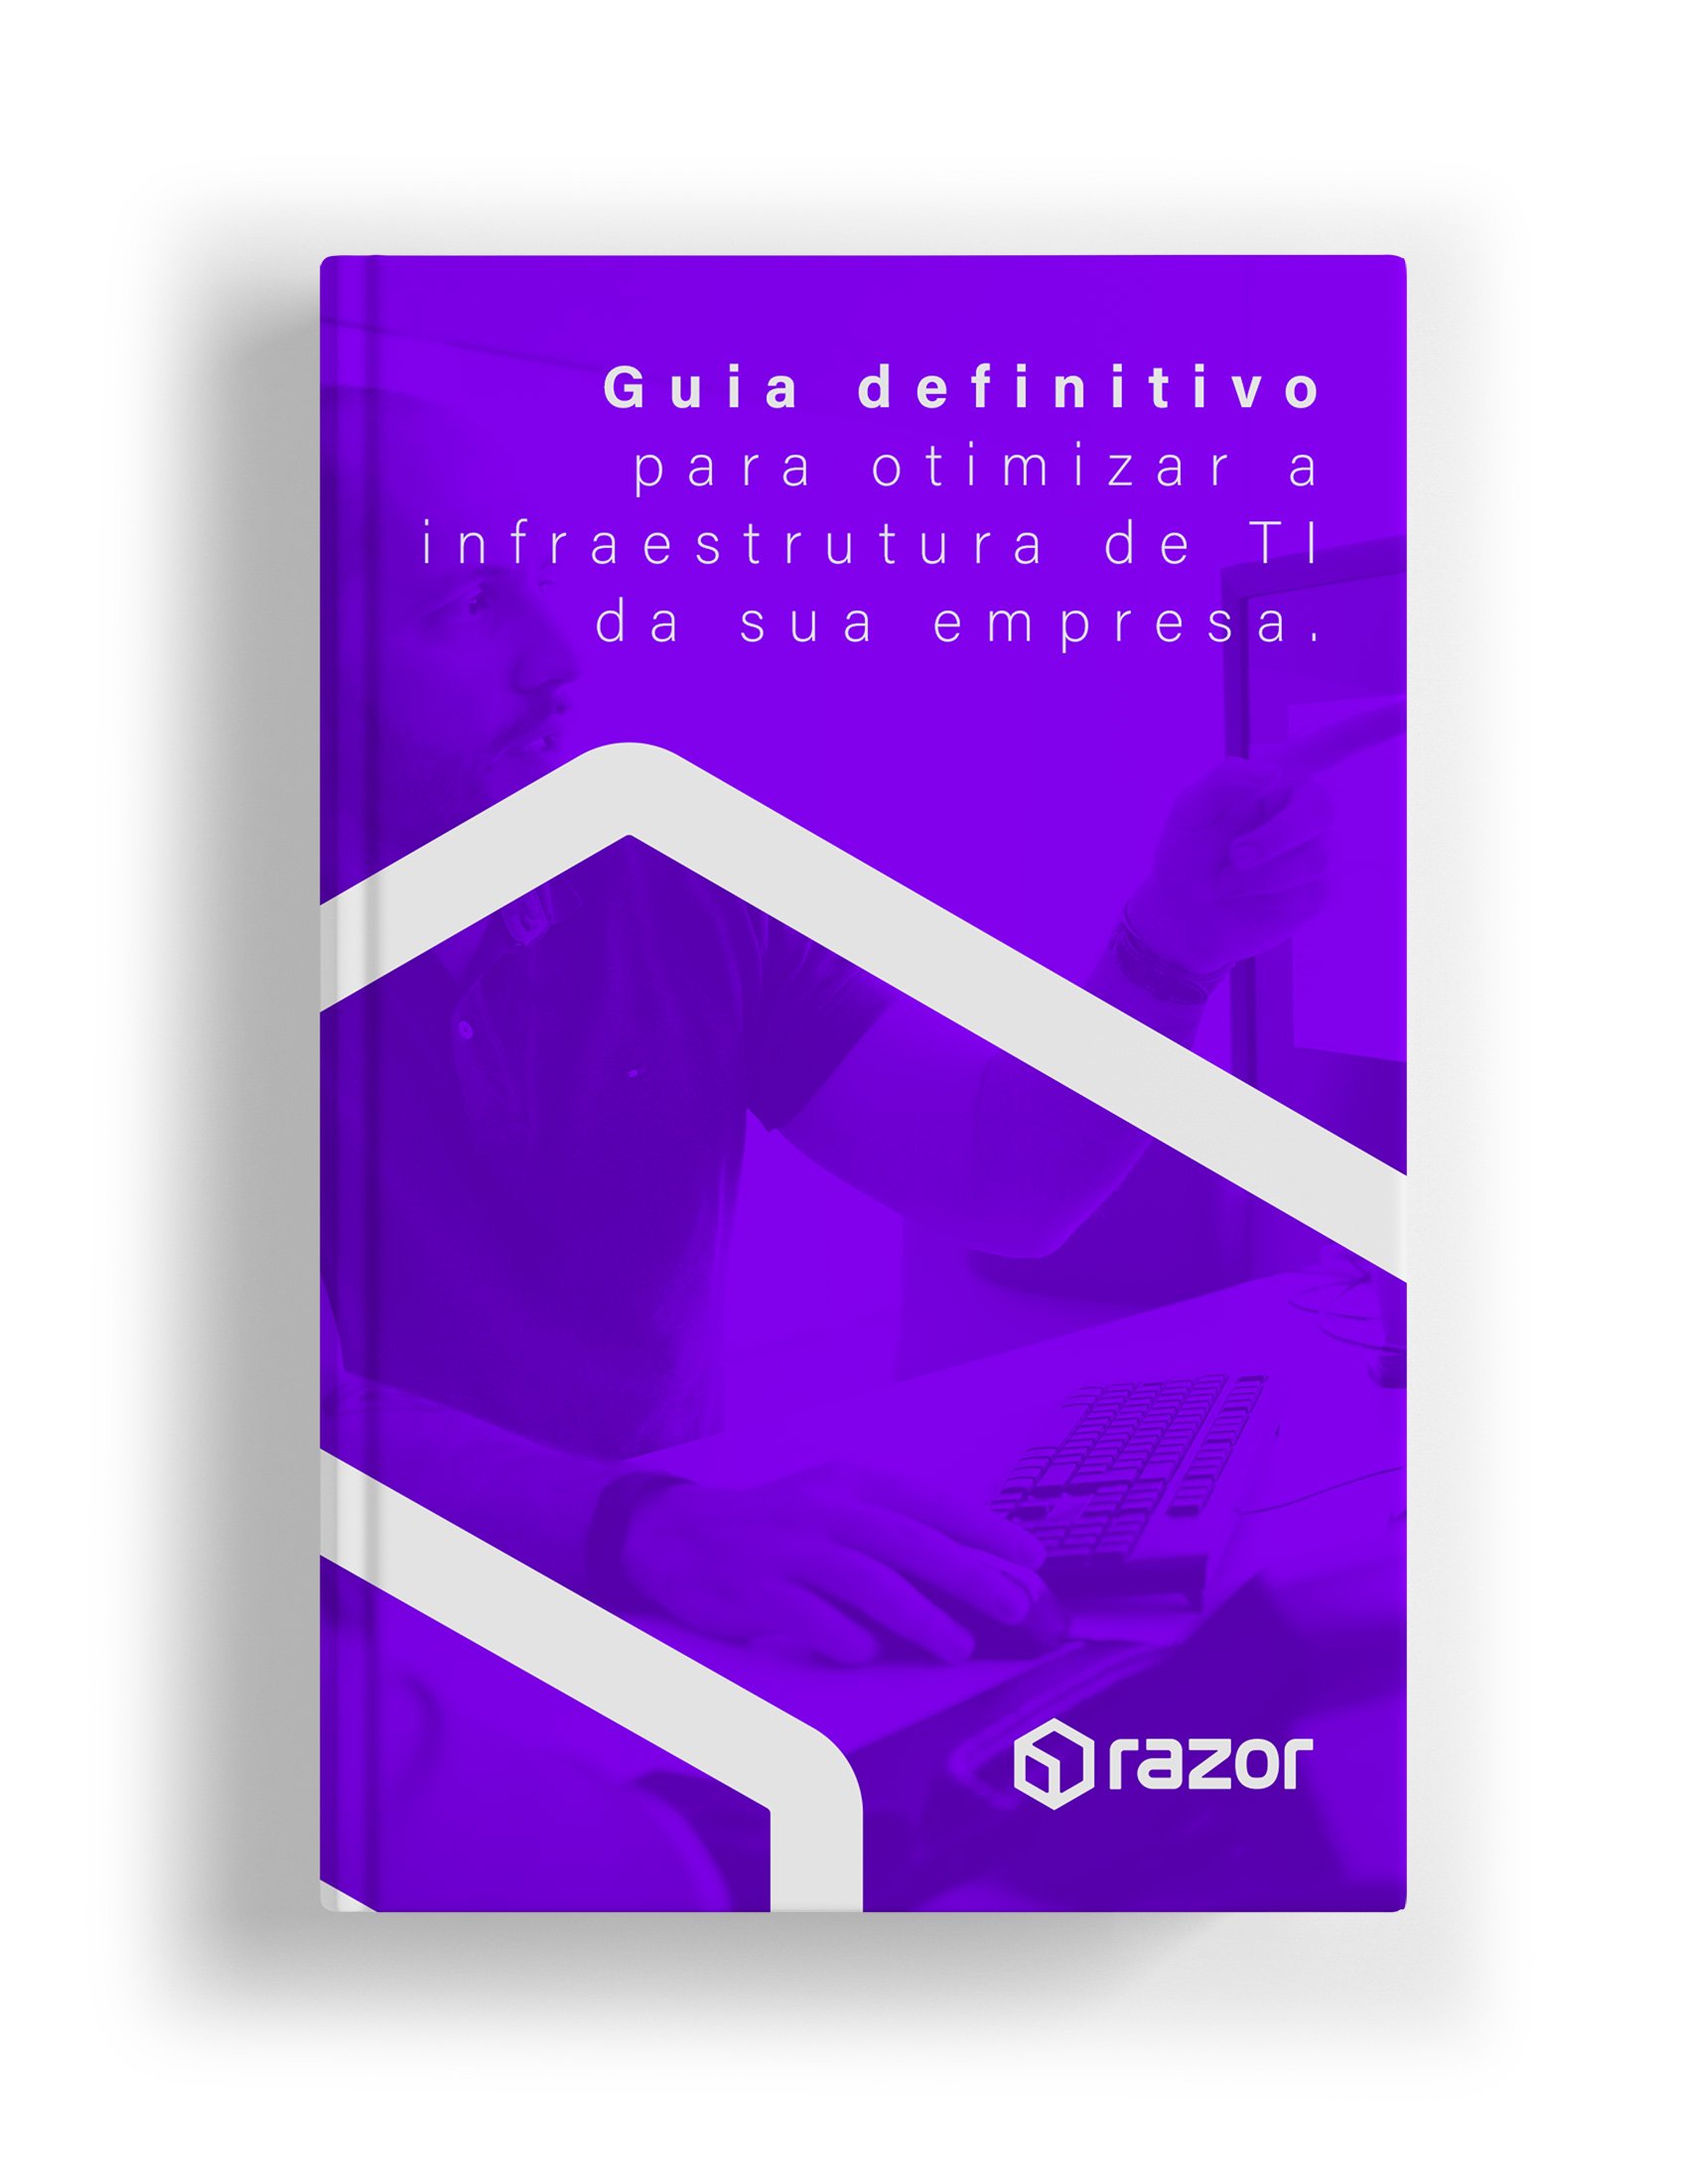 capa_e_book_guia_definitivo_para_otimizar_a_infraestrutura_de_TI_da_sua_empresa